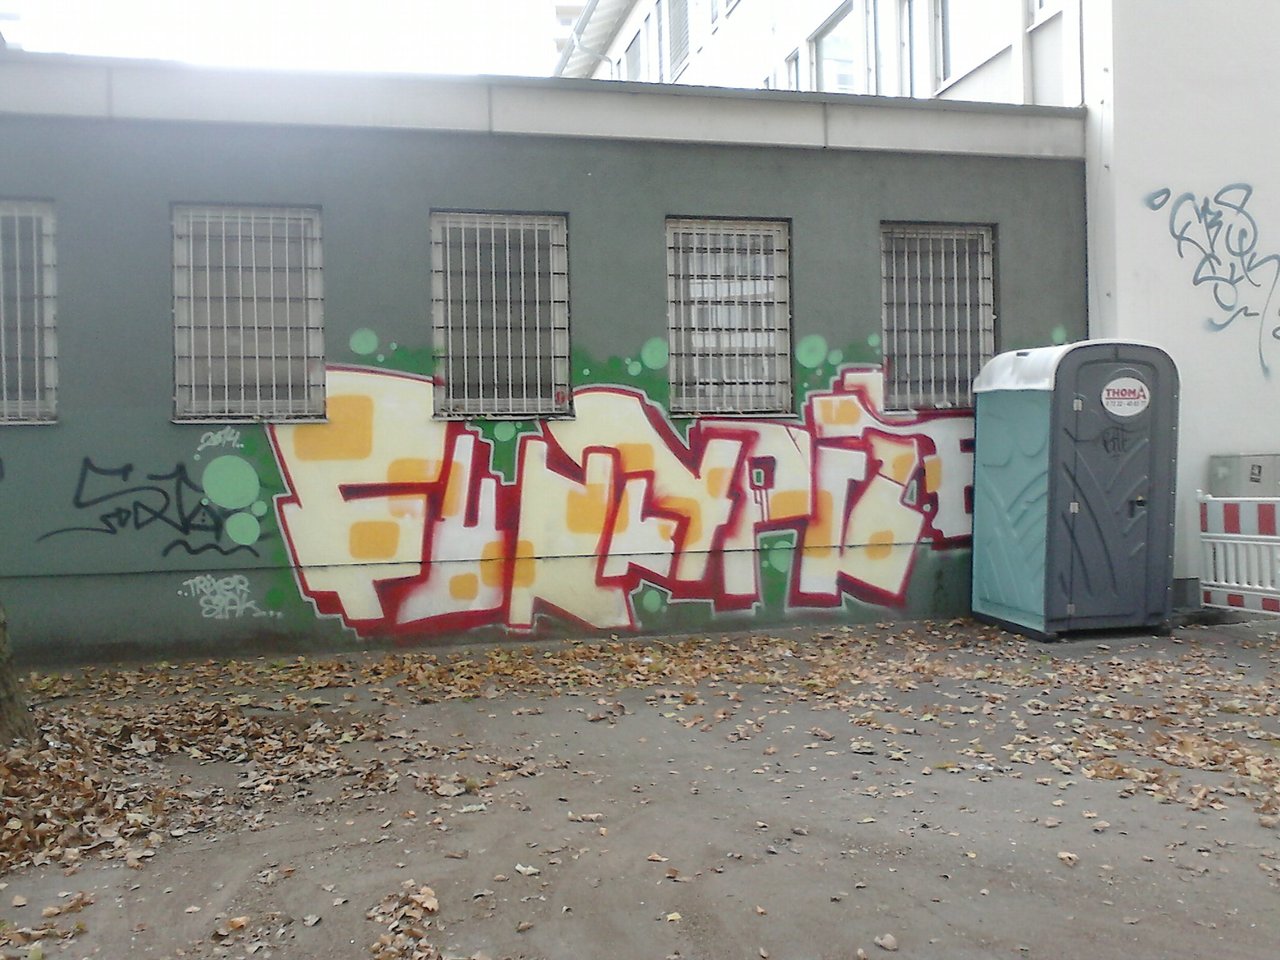 Graffiti Karlsruhe, Germany 
#streetart #art #urbanart #graffiti #karlsruhe https://t.co/Z0TjArKBWt